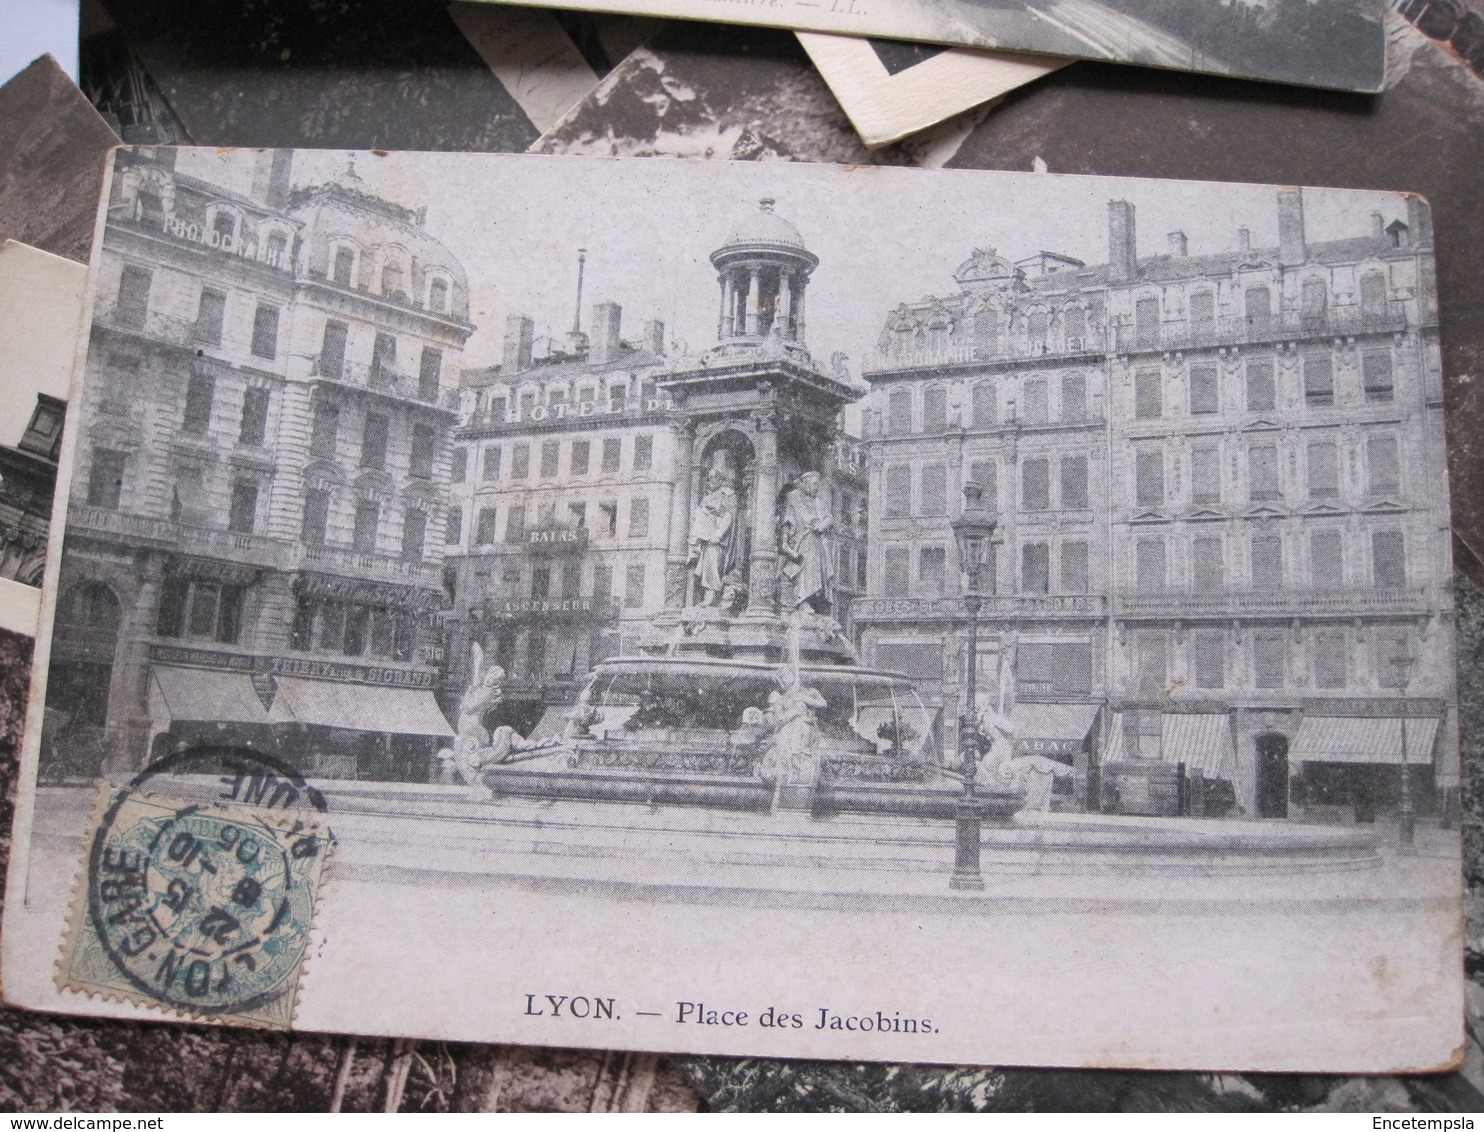 CPA - Carte postale - Lot de 100 cartes postales de France - ( Lot 33 )